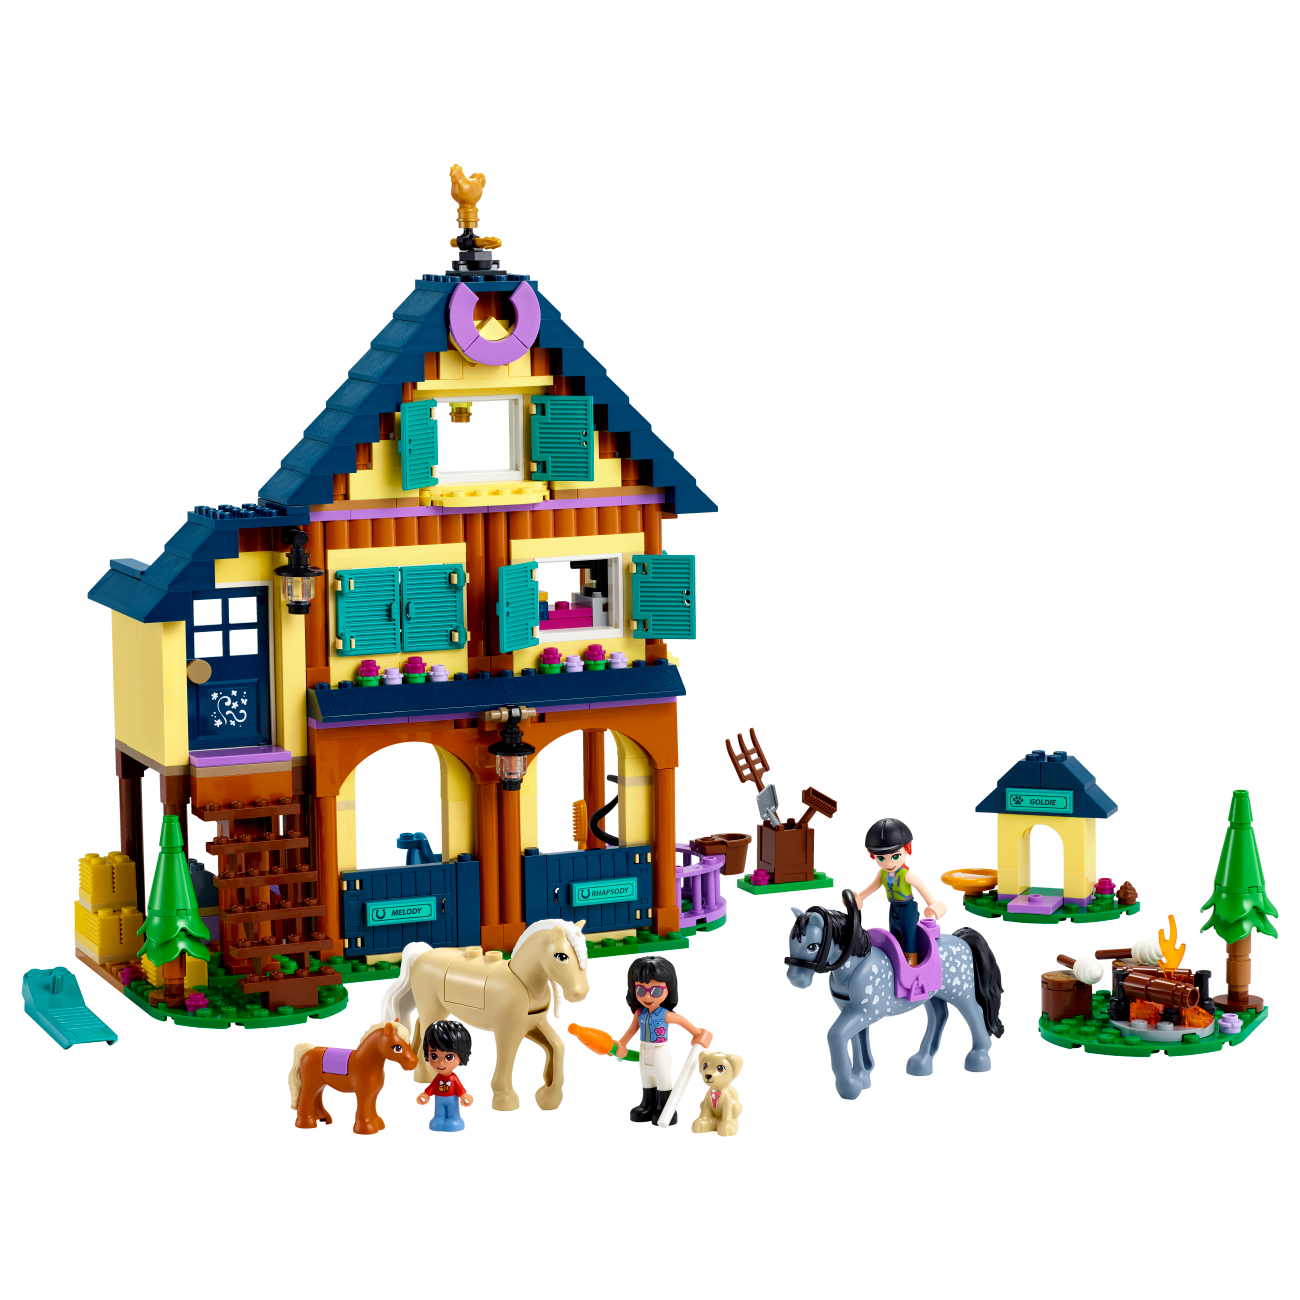 LEGO Friends 41683 - Reiterhof im Wald